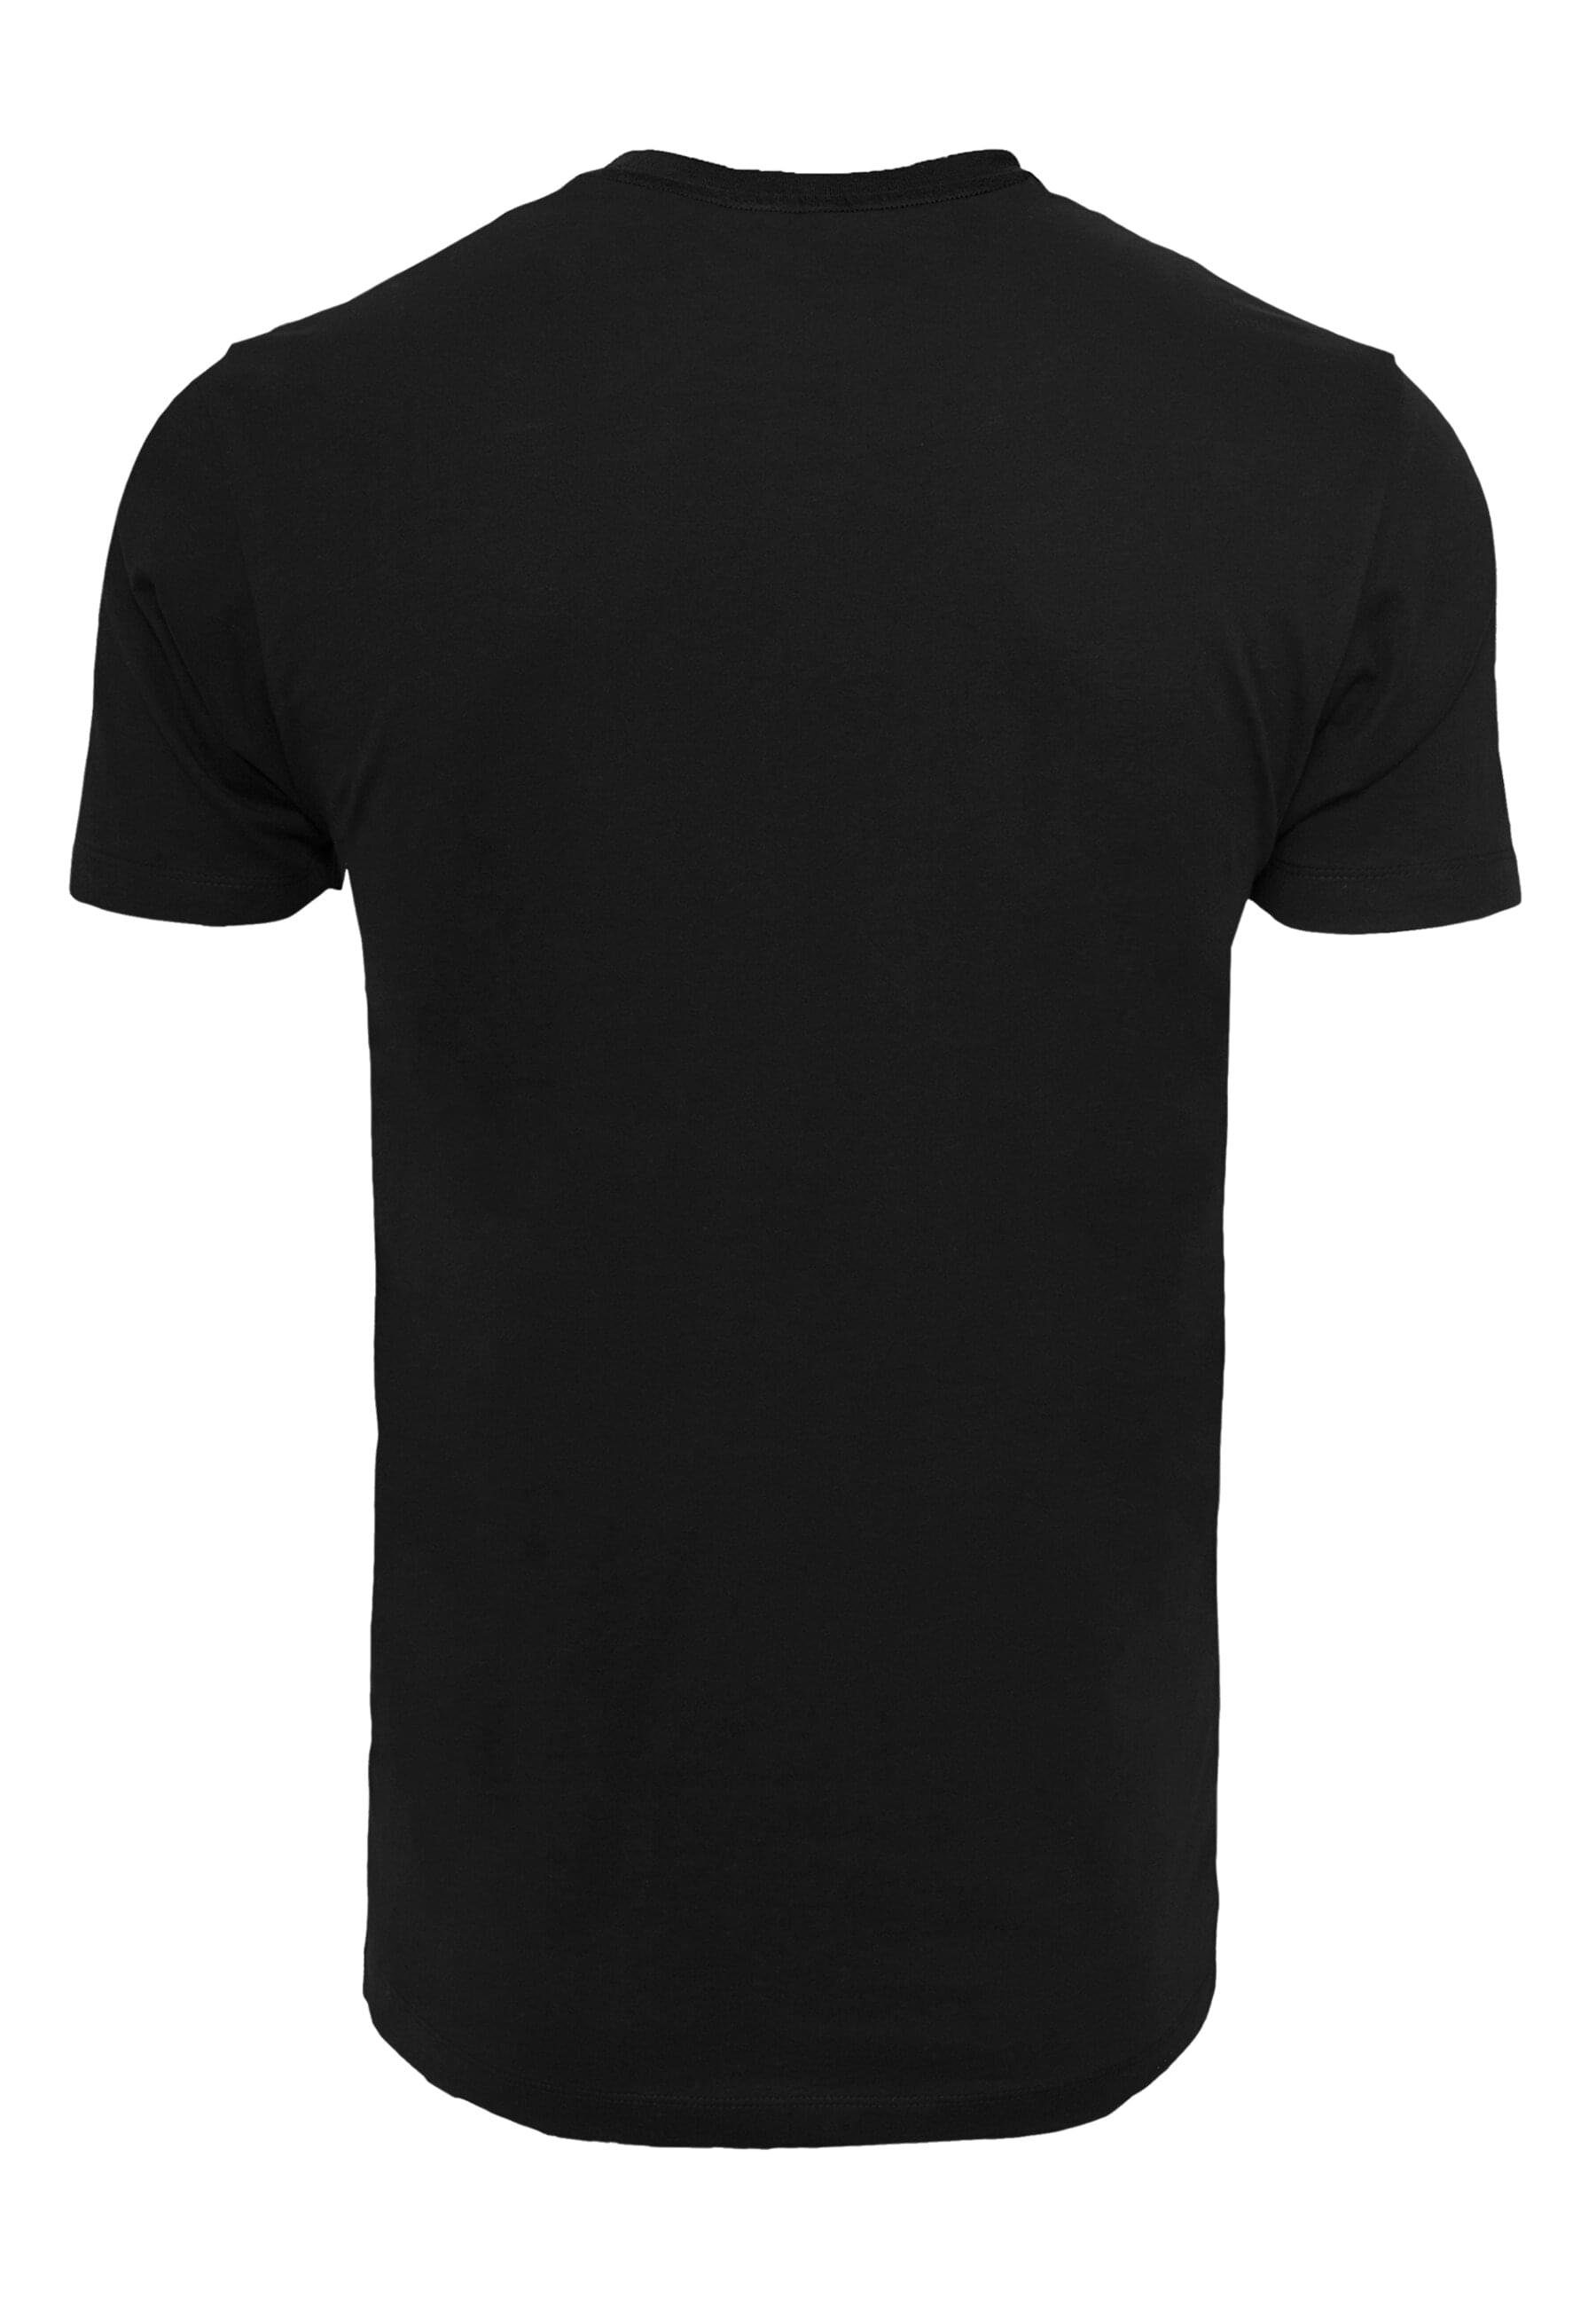 Merchcode T-Shirt Christmas Neck beats Herren black T-Shirt Round (1-tlg)